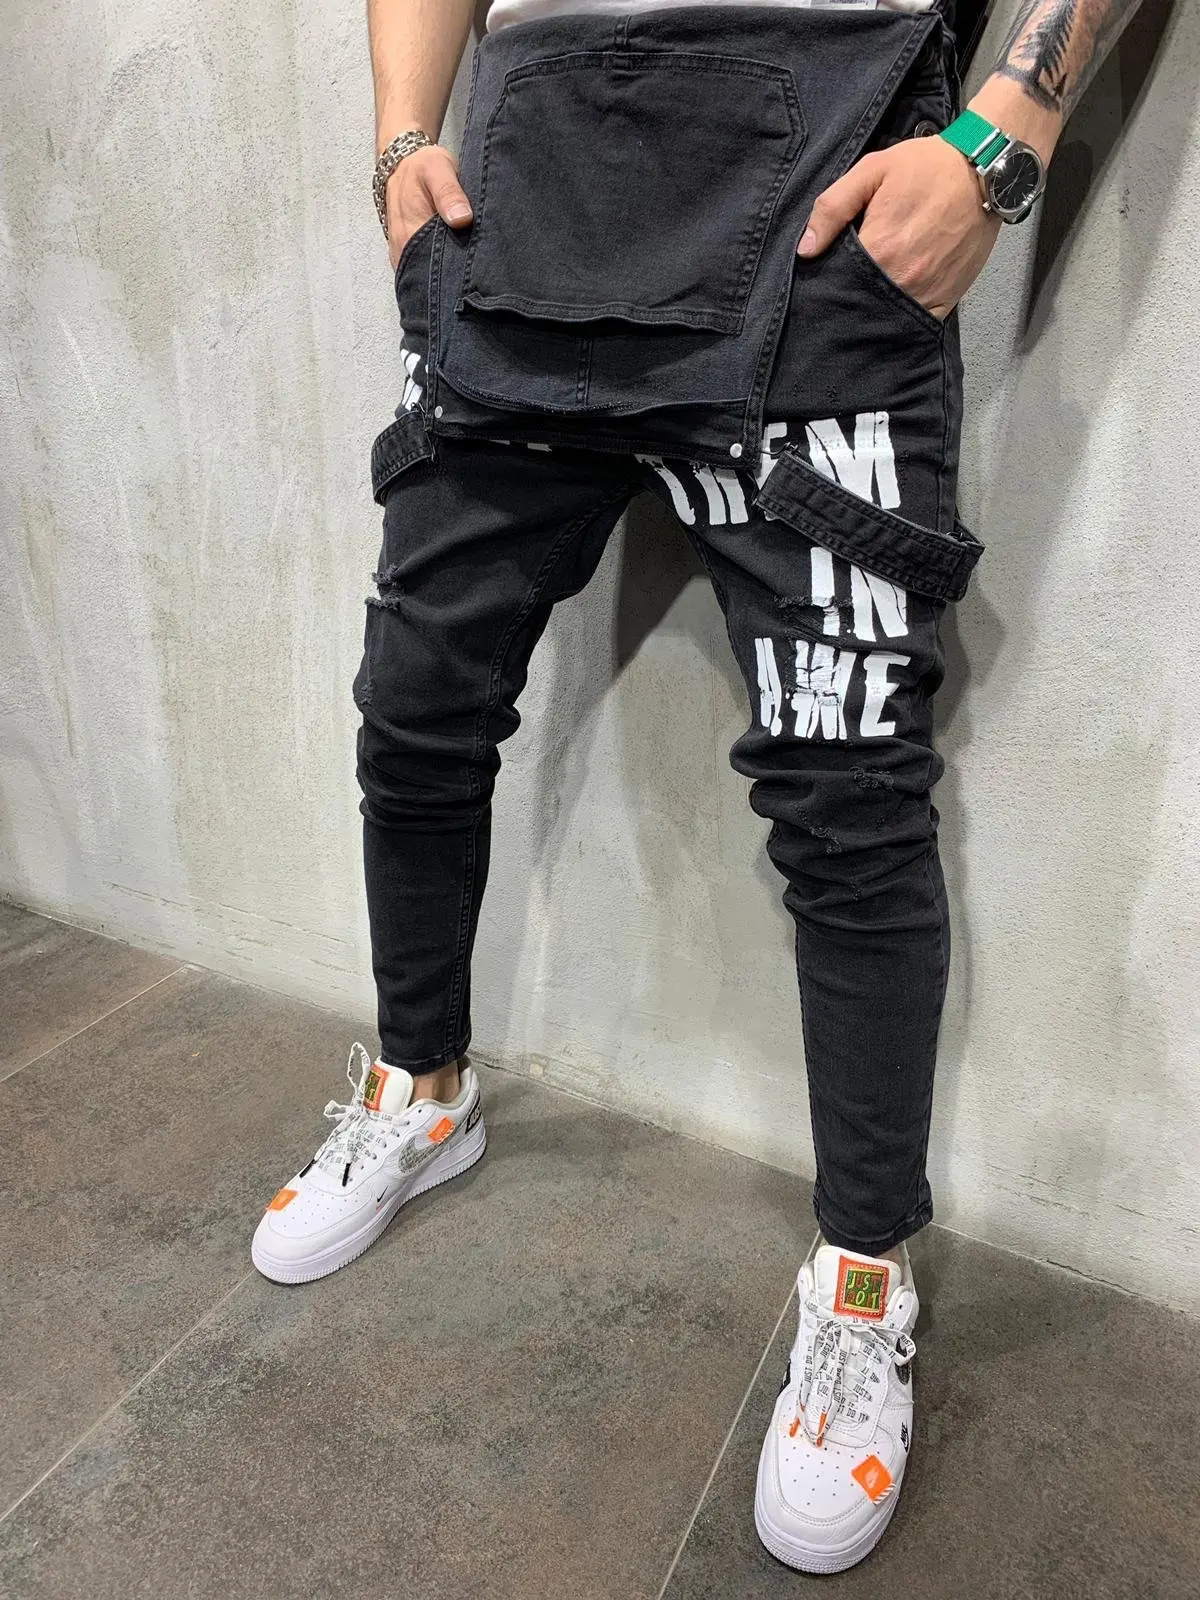 

Mens Ripped Jeans Jumpsuits Streetwear Distressed Bib Overalls for Men Fashion Letter Biker Pants Black Straight Trousers 3XL